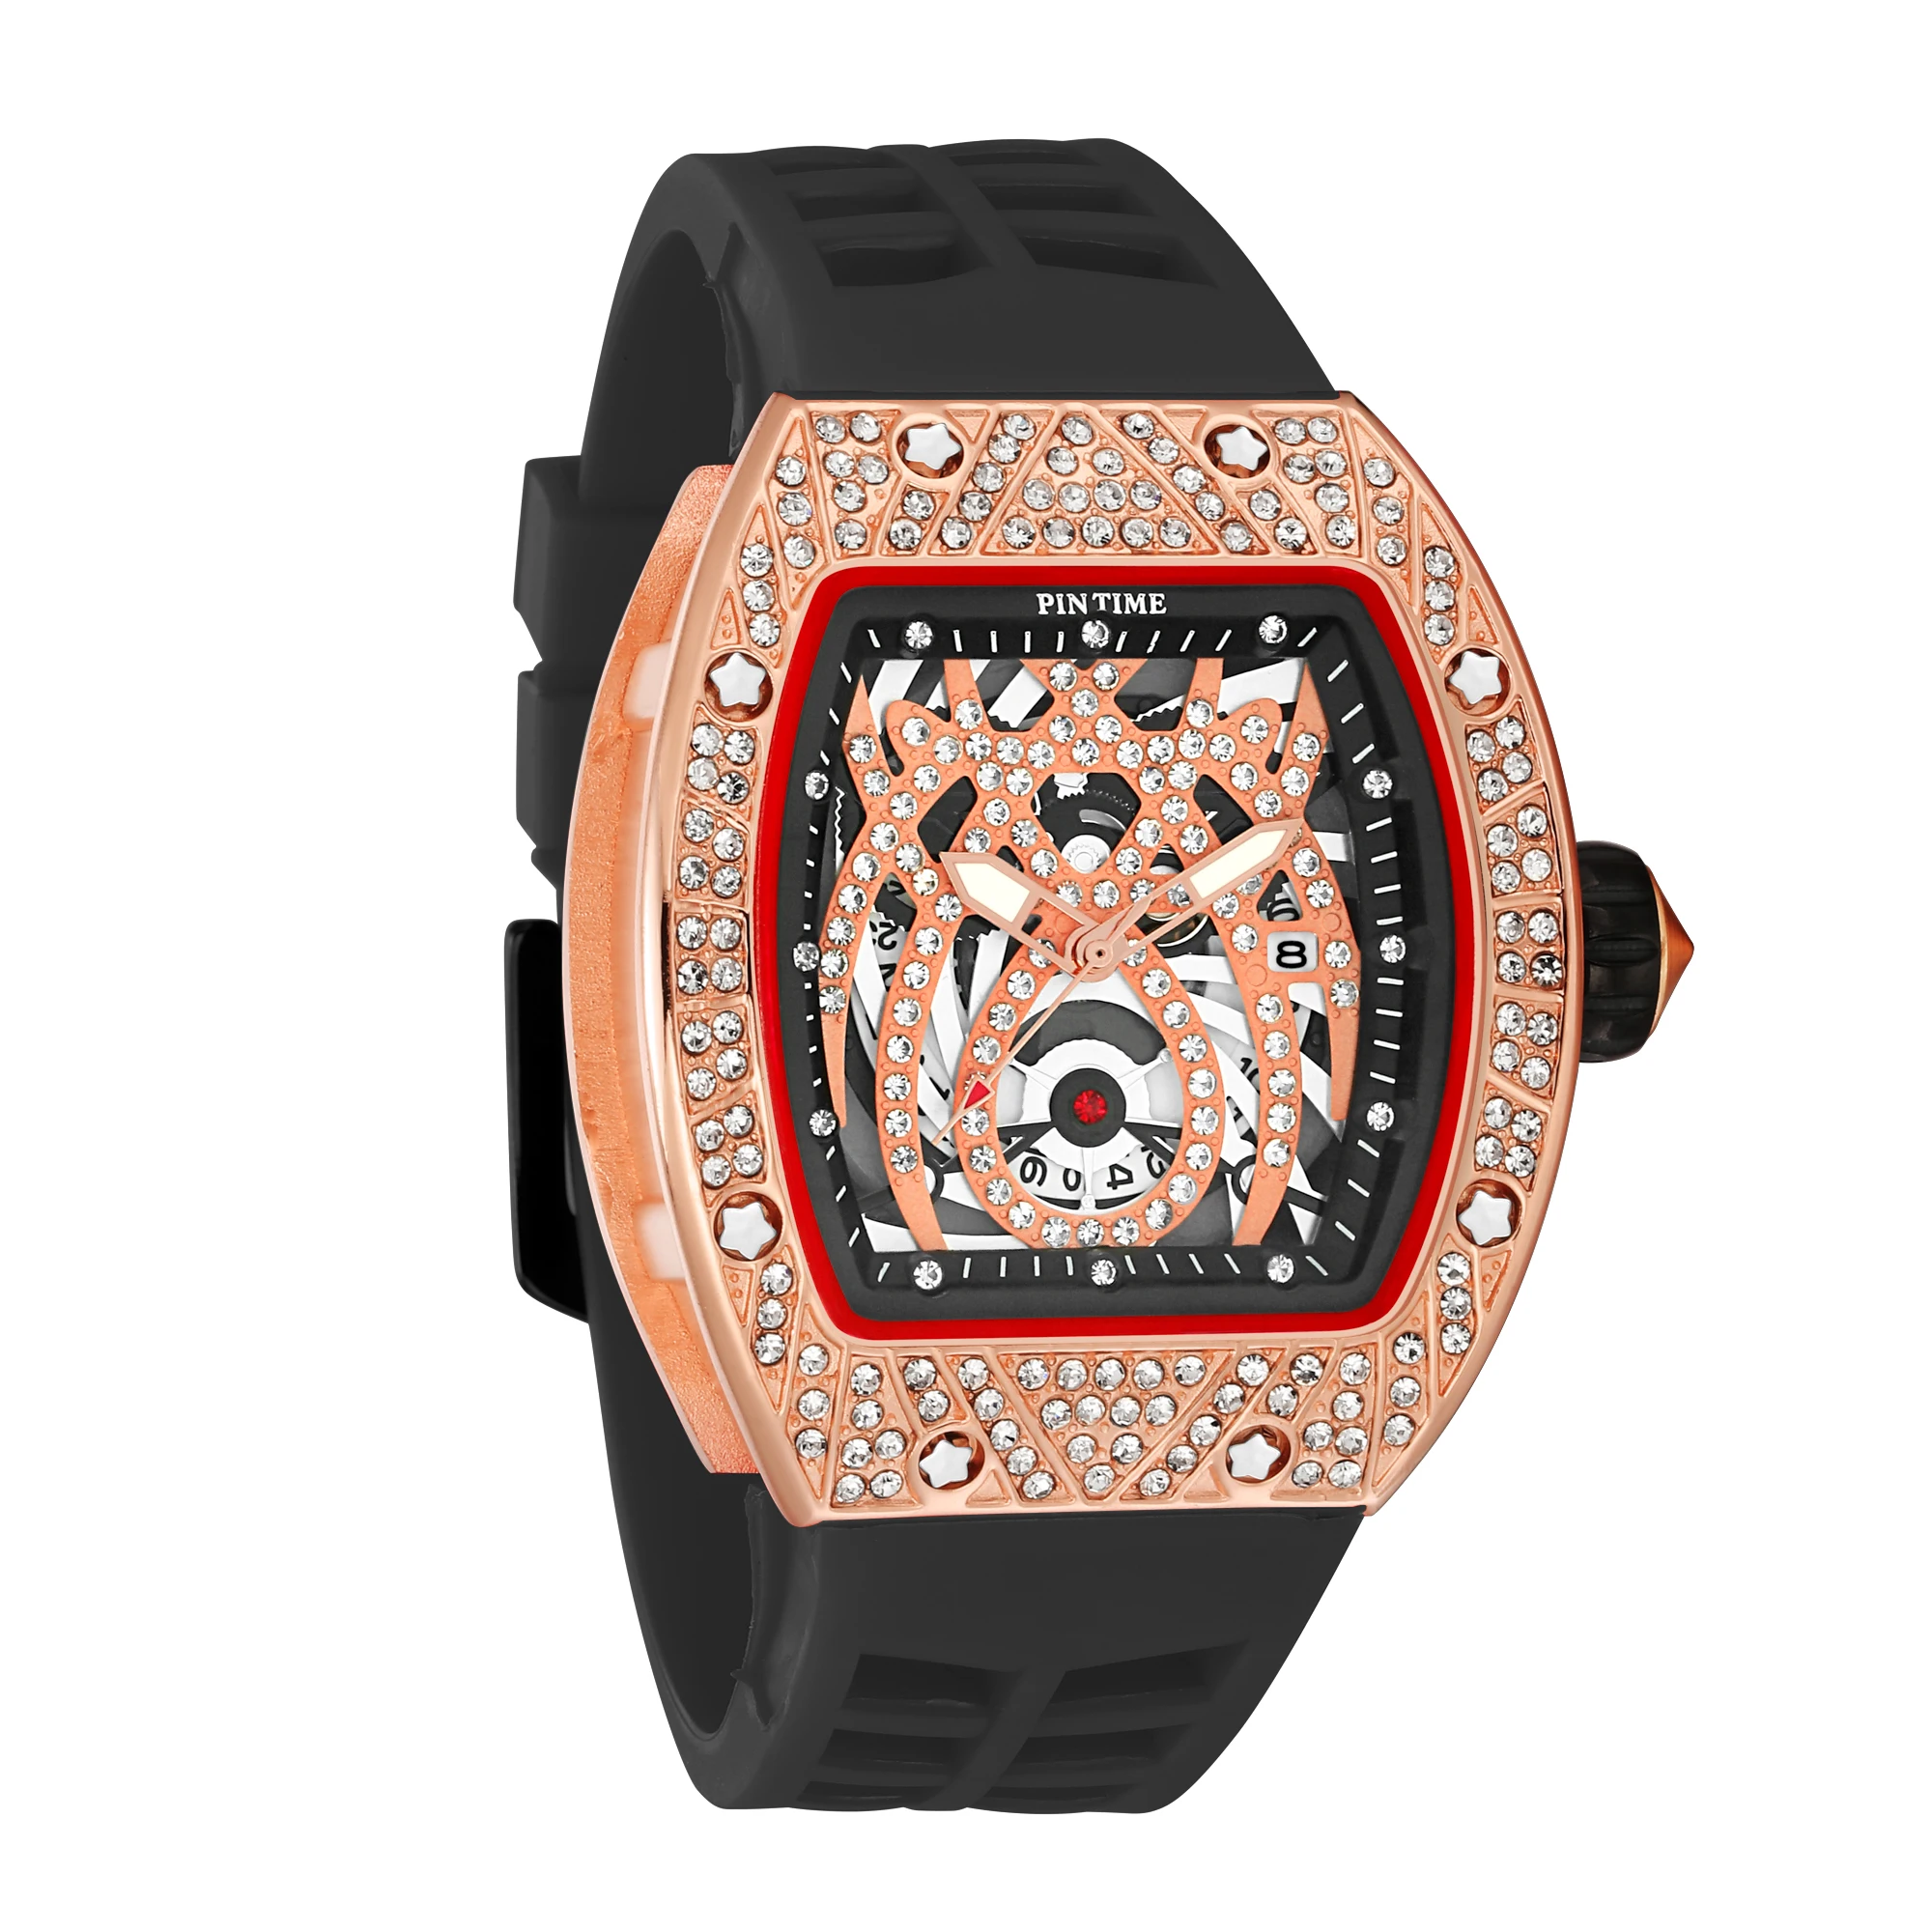 Diamond Watch Men Luxury Brand Tonneau Design Waterproof Watches Stainless Steel Wristwatch Sport Chronograph Mens Watch+Box